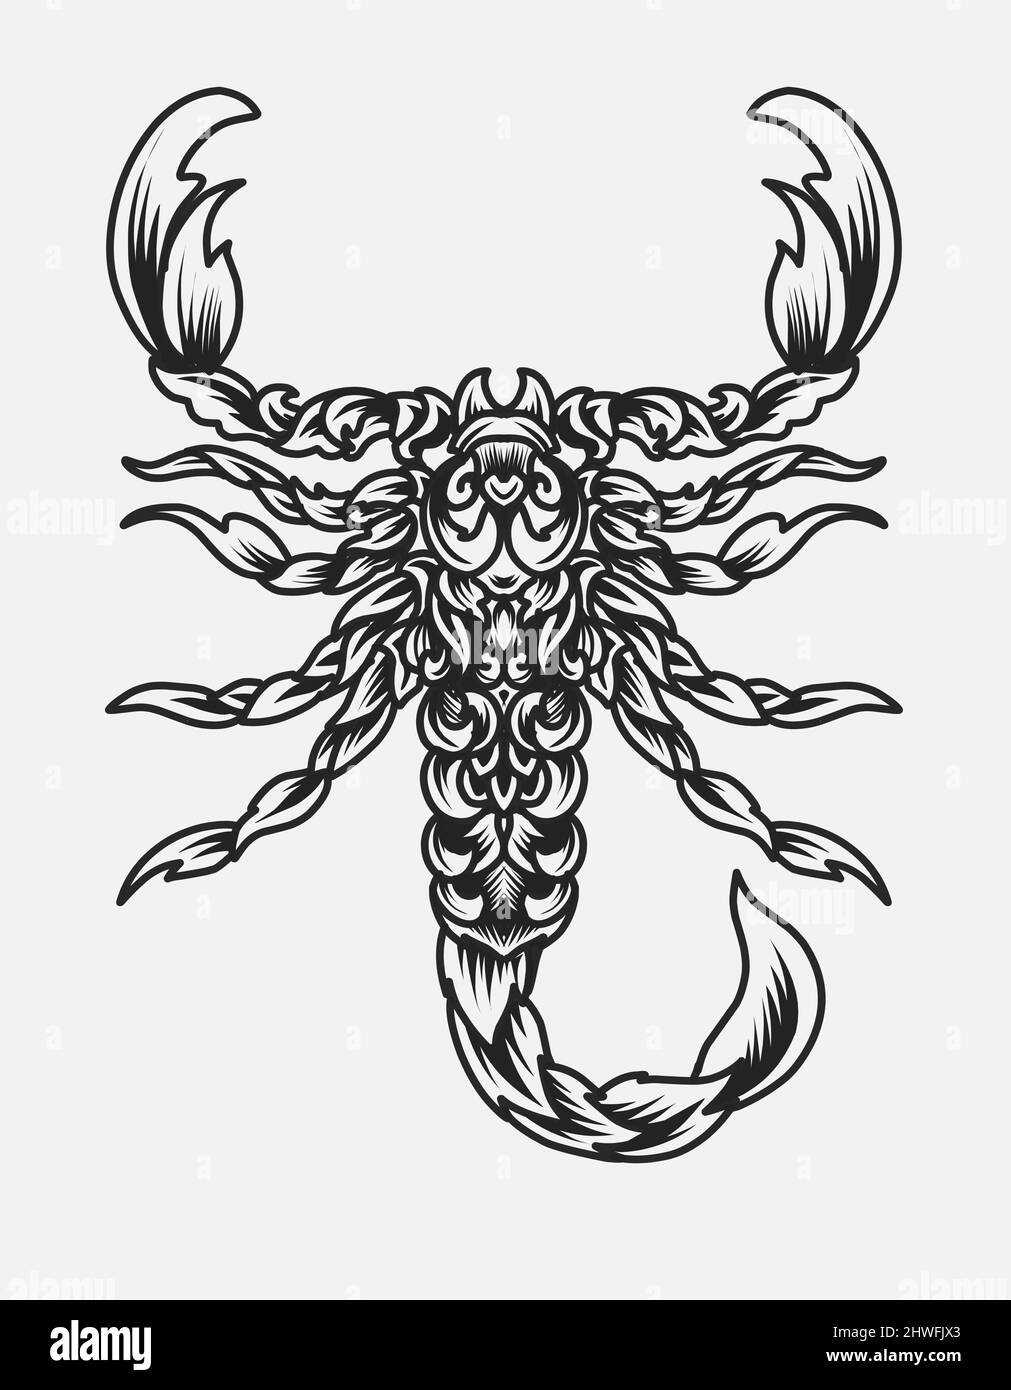 illustration vector scorpion ornament style Stock Vector